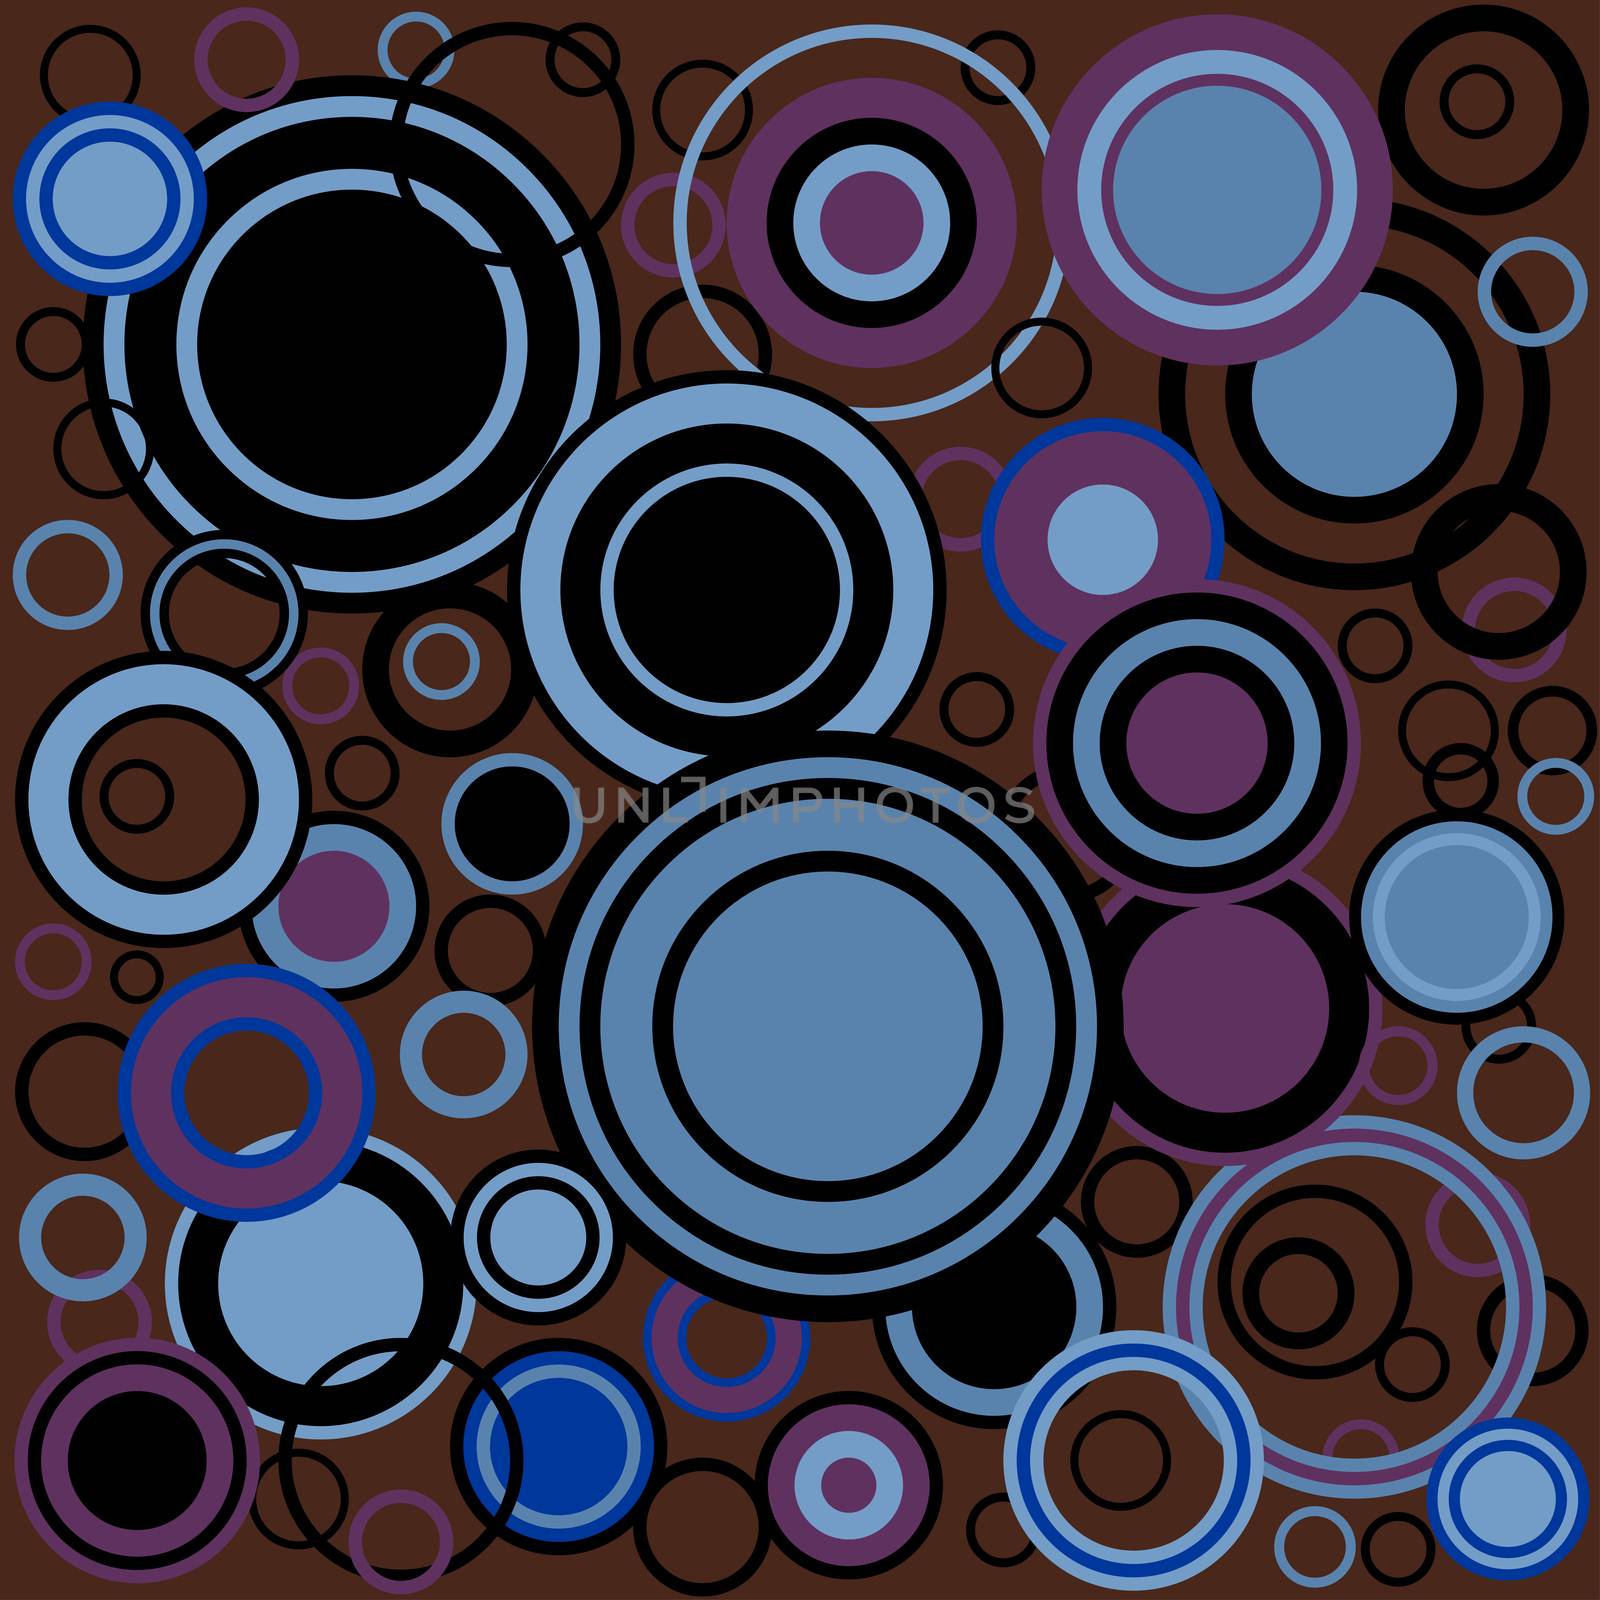 A background of retrograde circlesover a dark background.